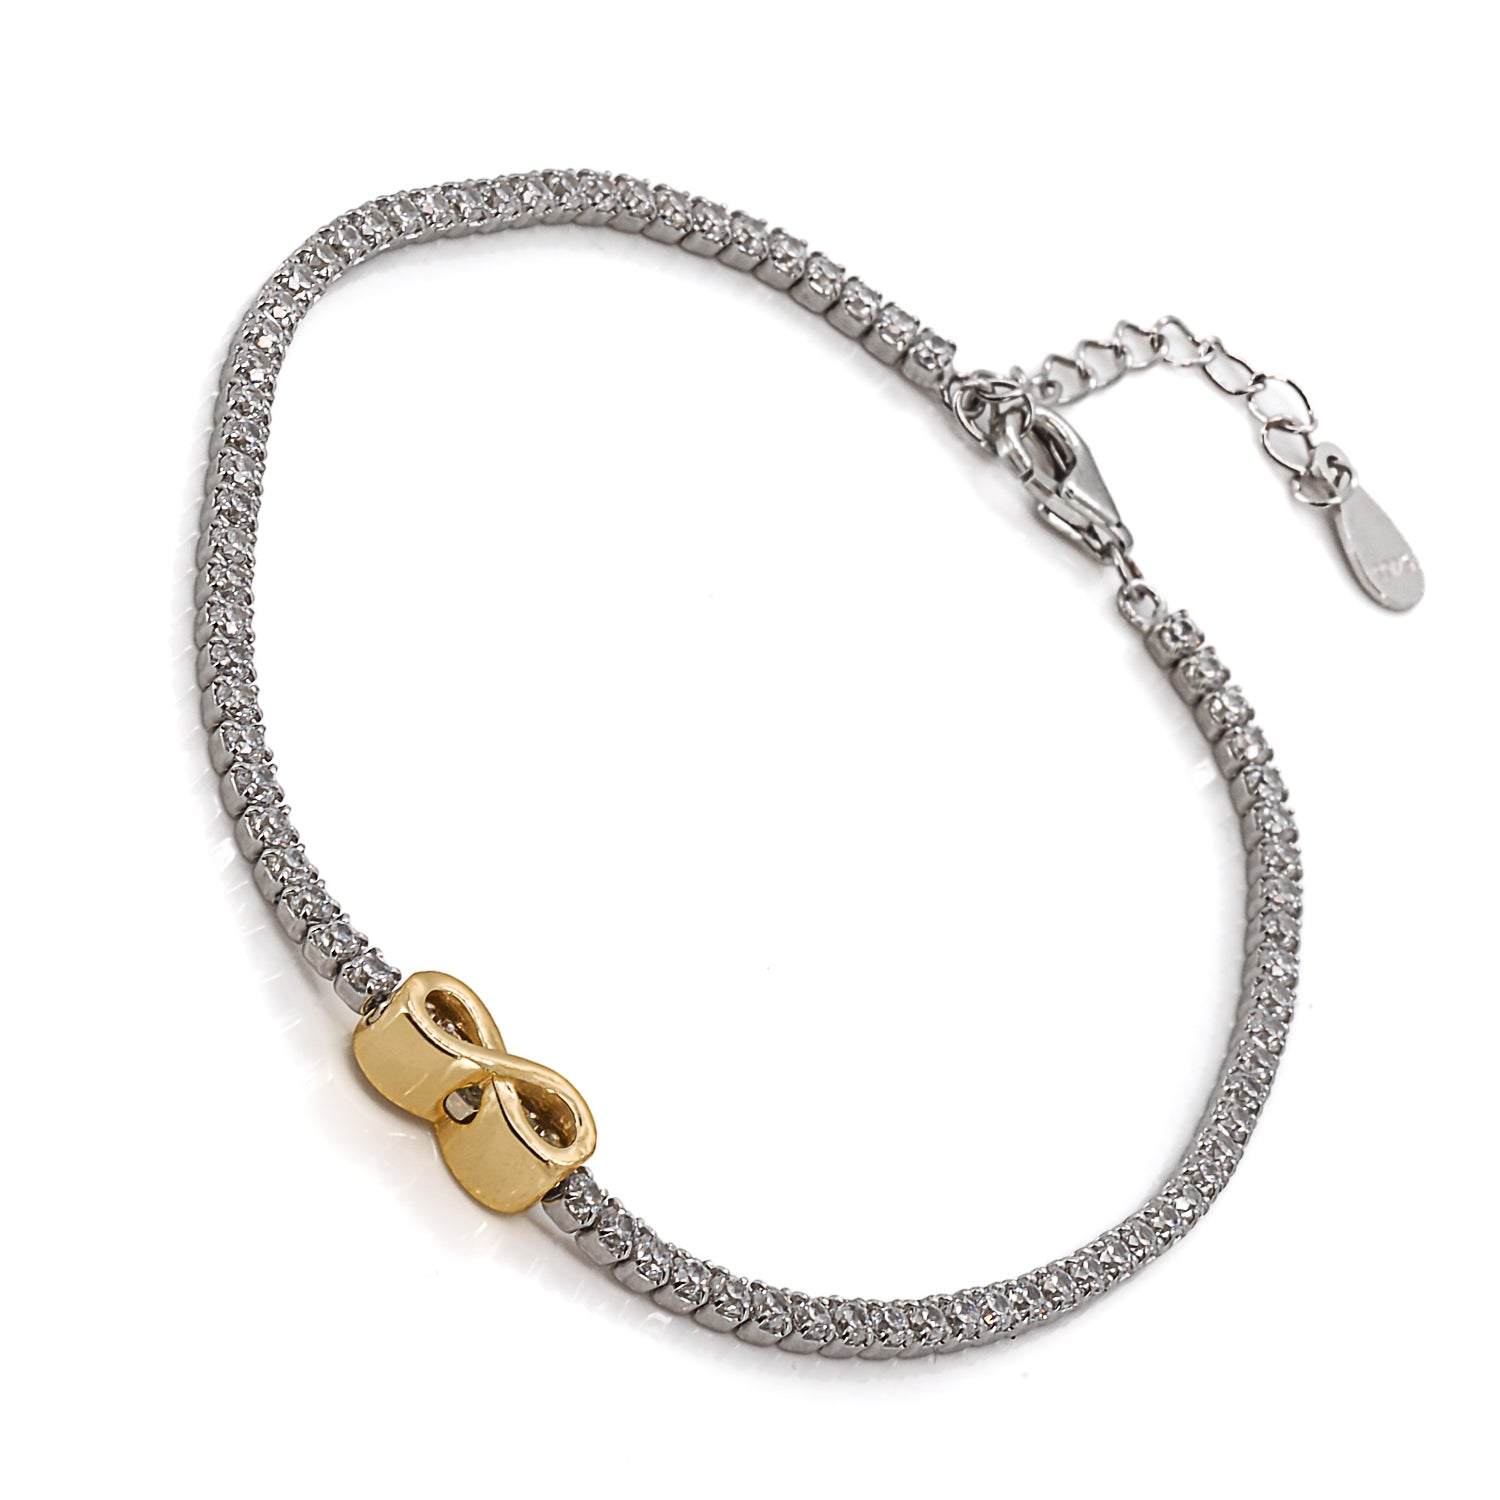 Minimalist charm: Gold Infinity Diamond Tennis Bracelet.